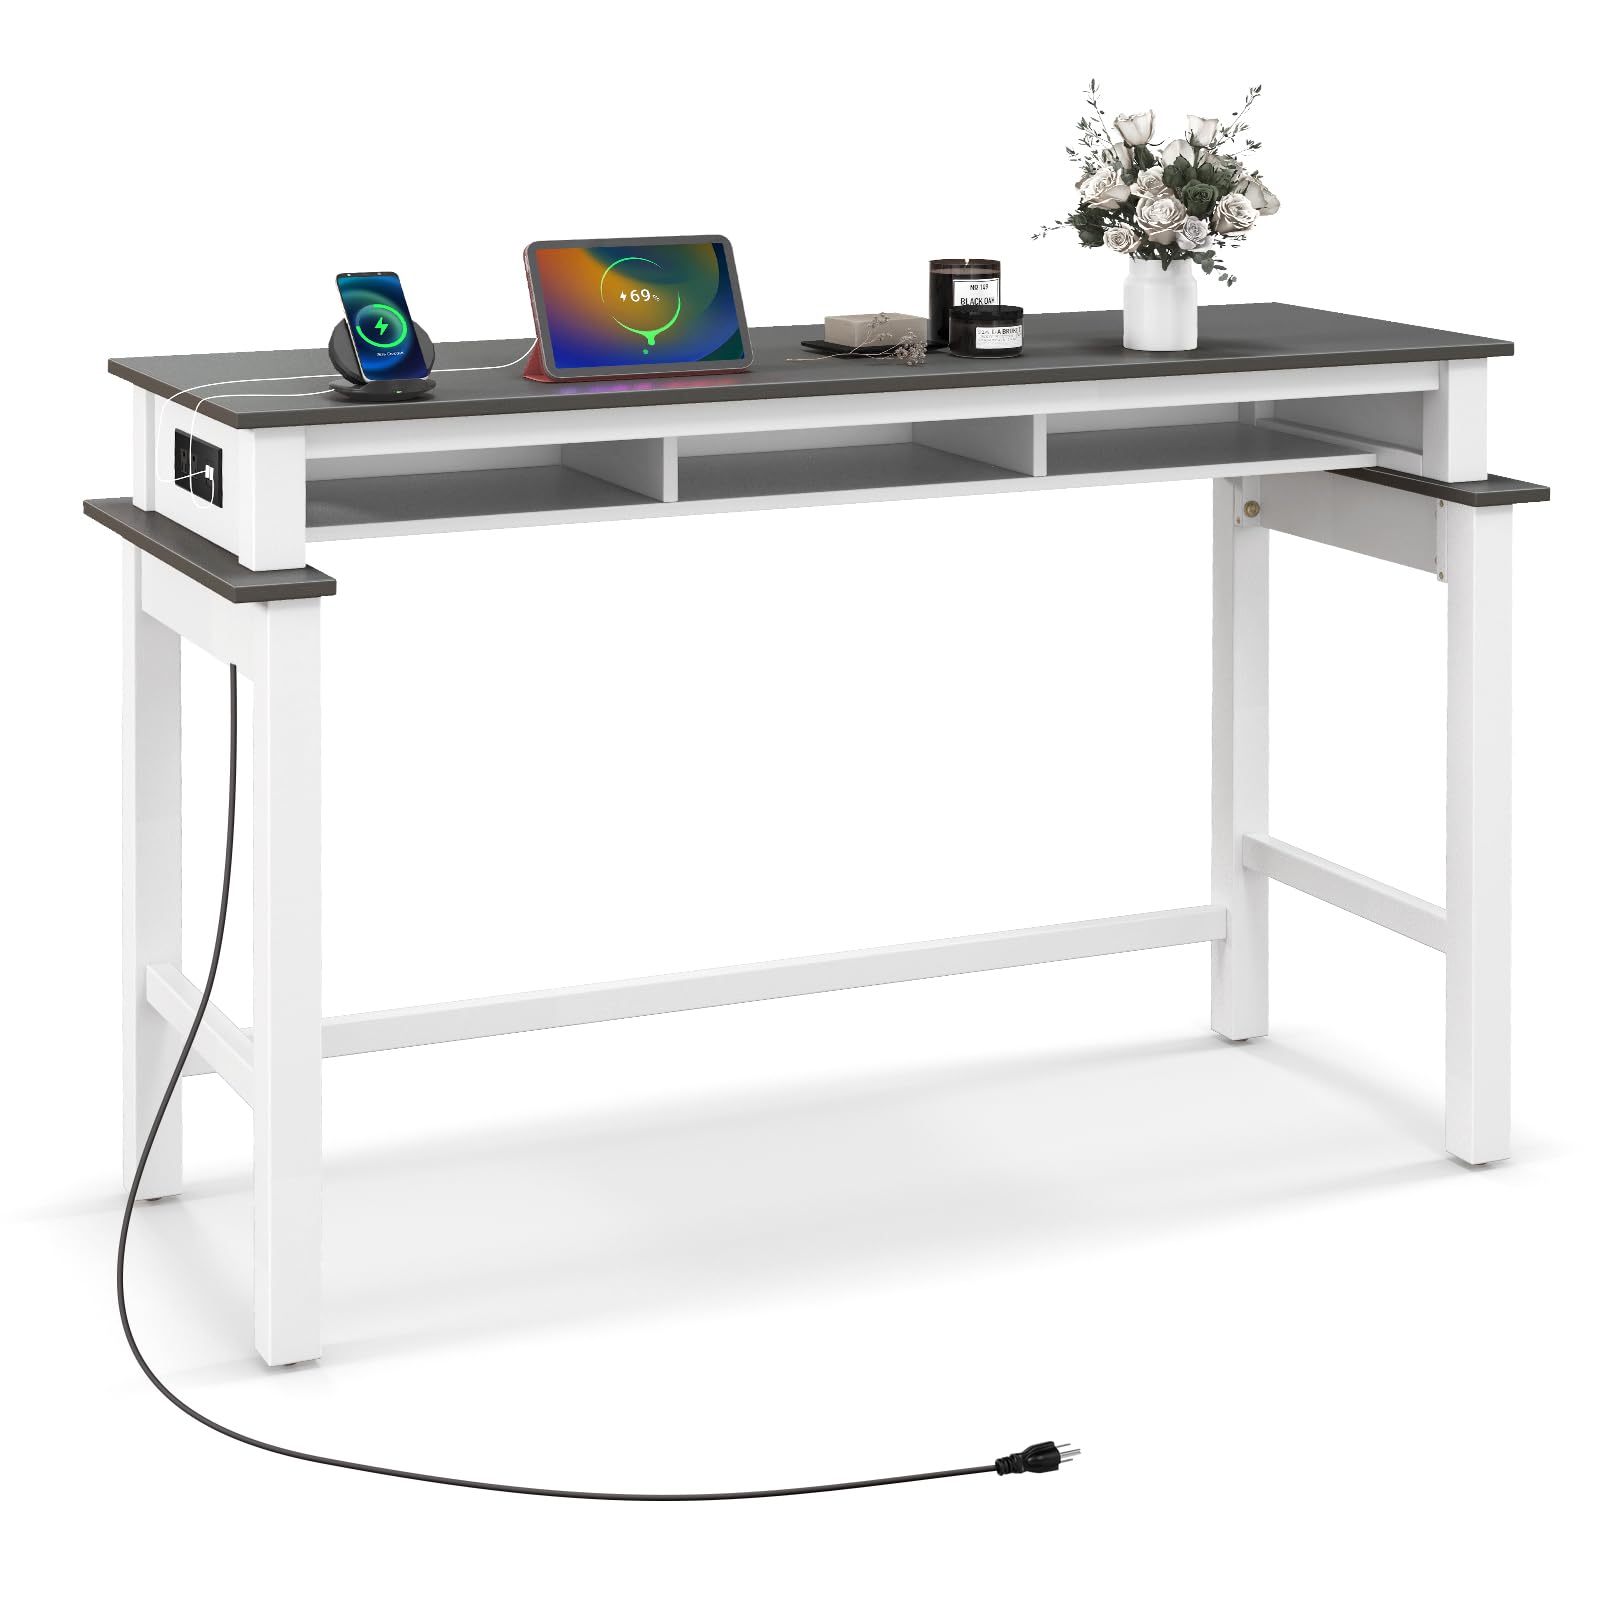 Giantex Bar Table, Counter Height Table